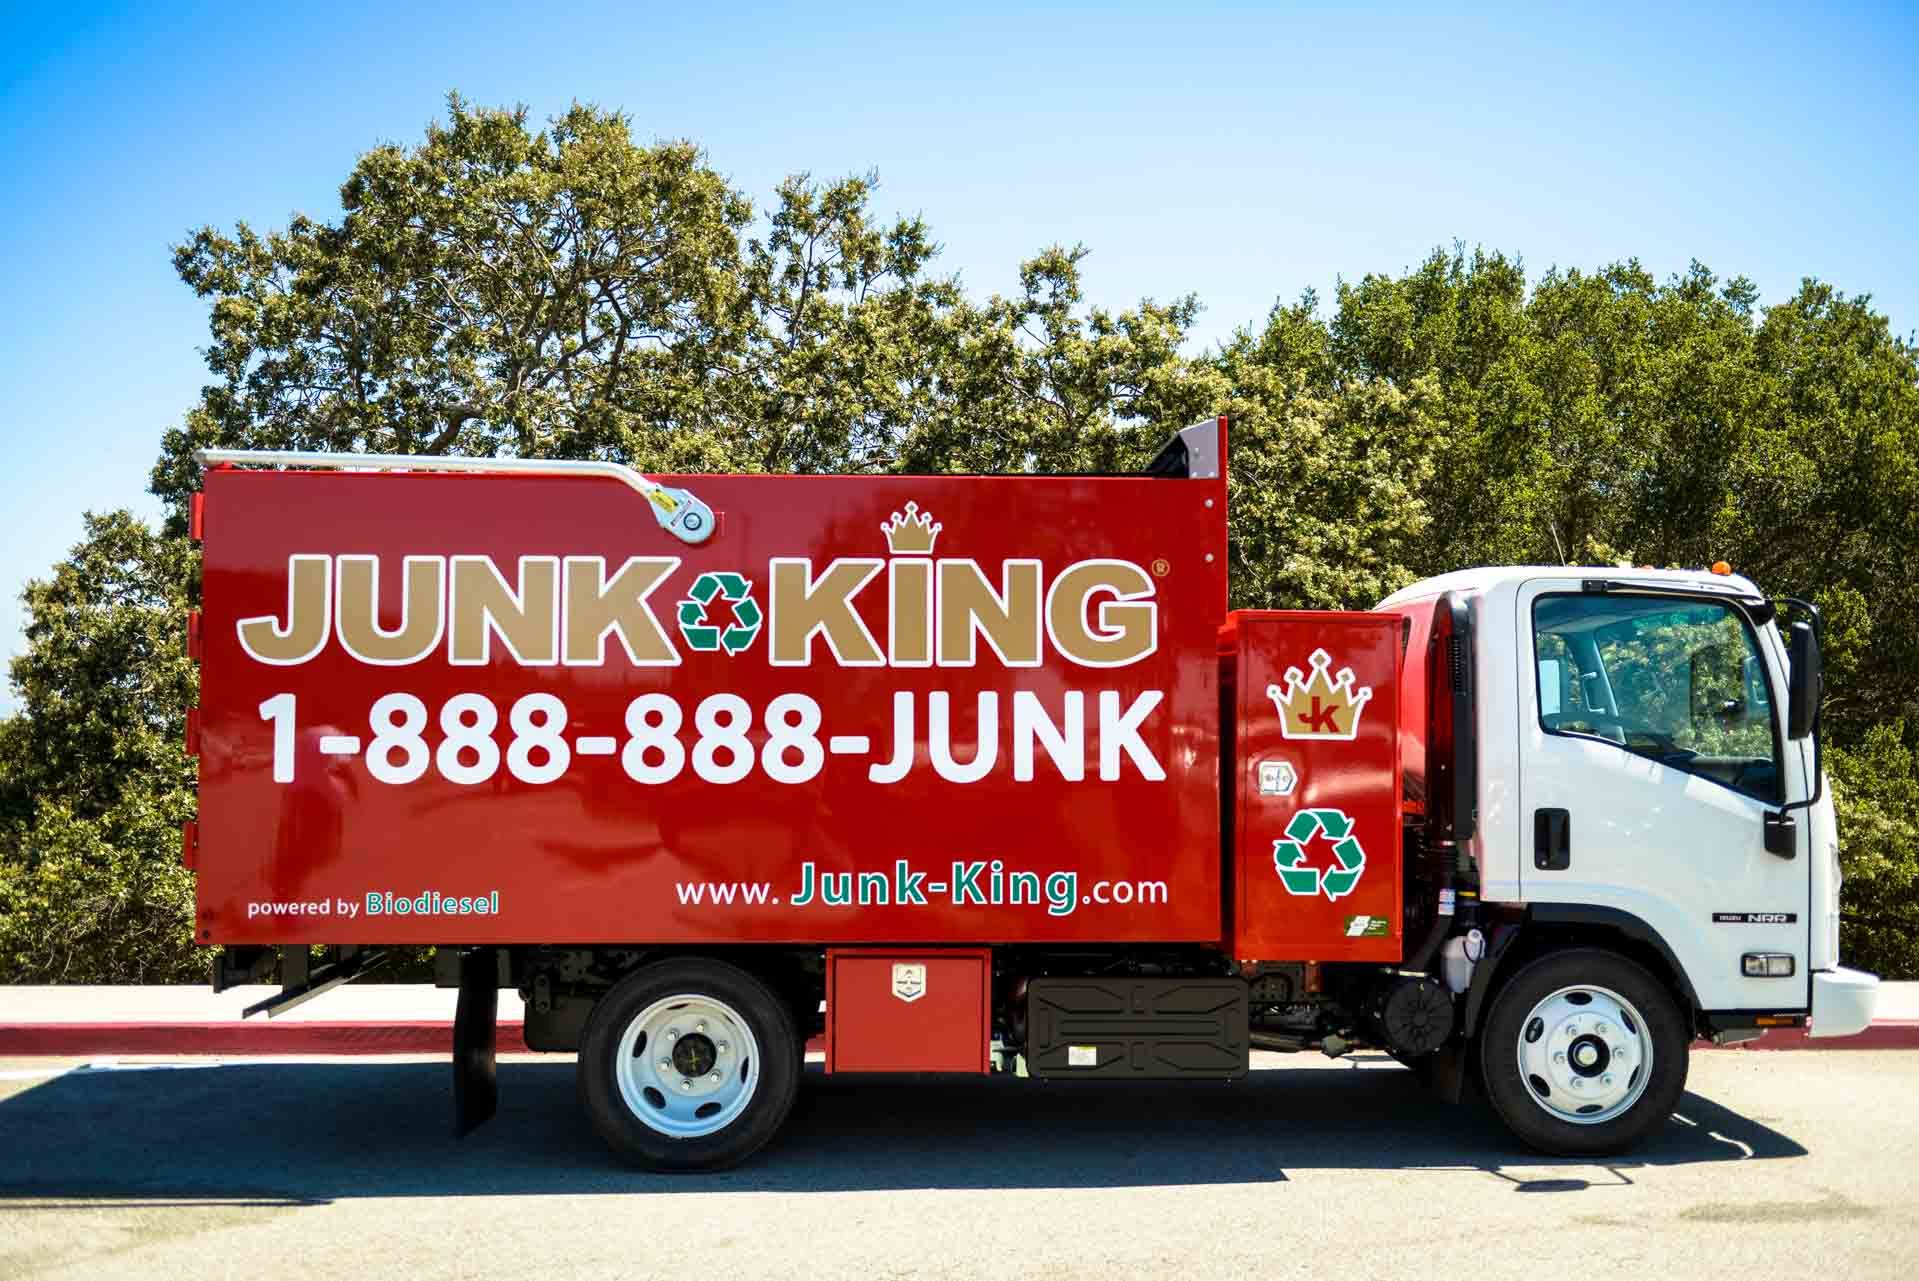 Junk King Franchise Truck